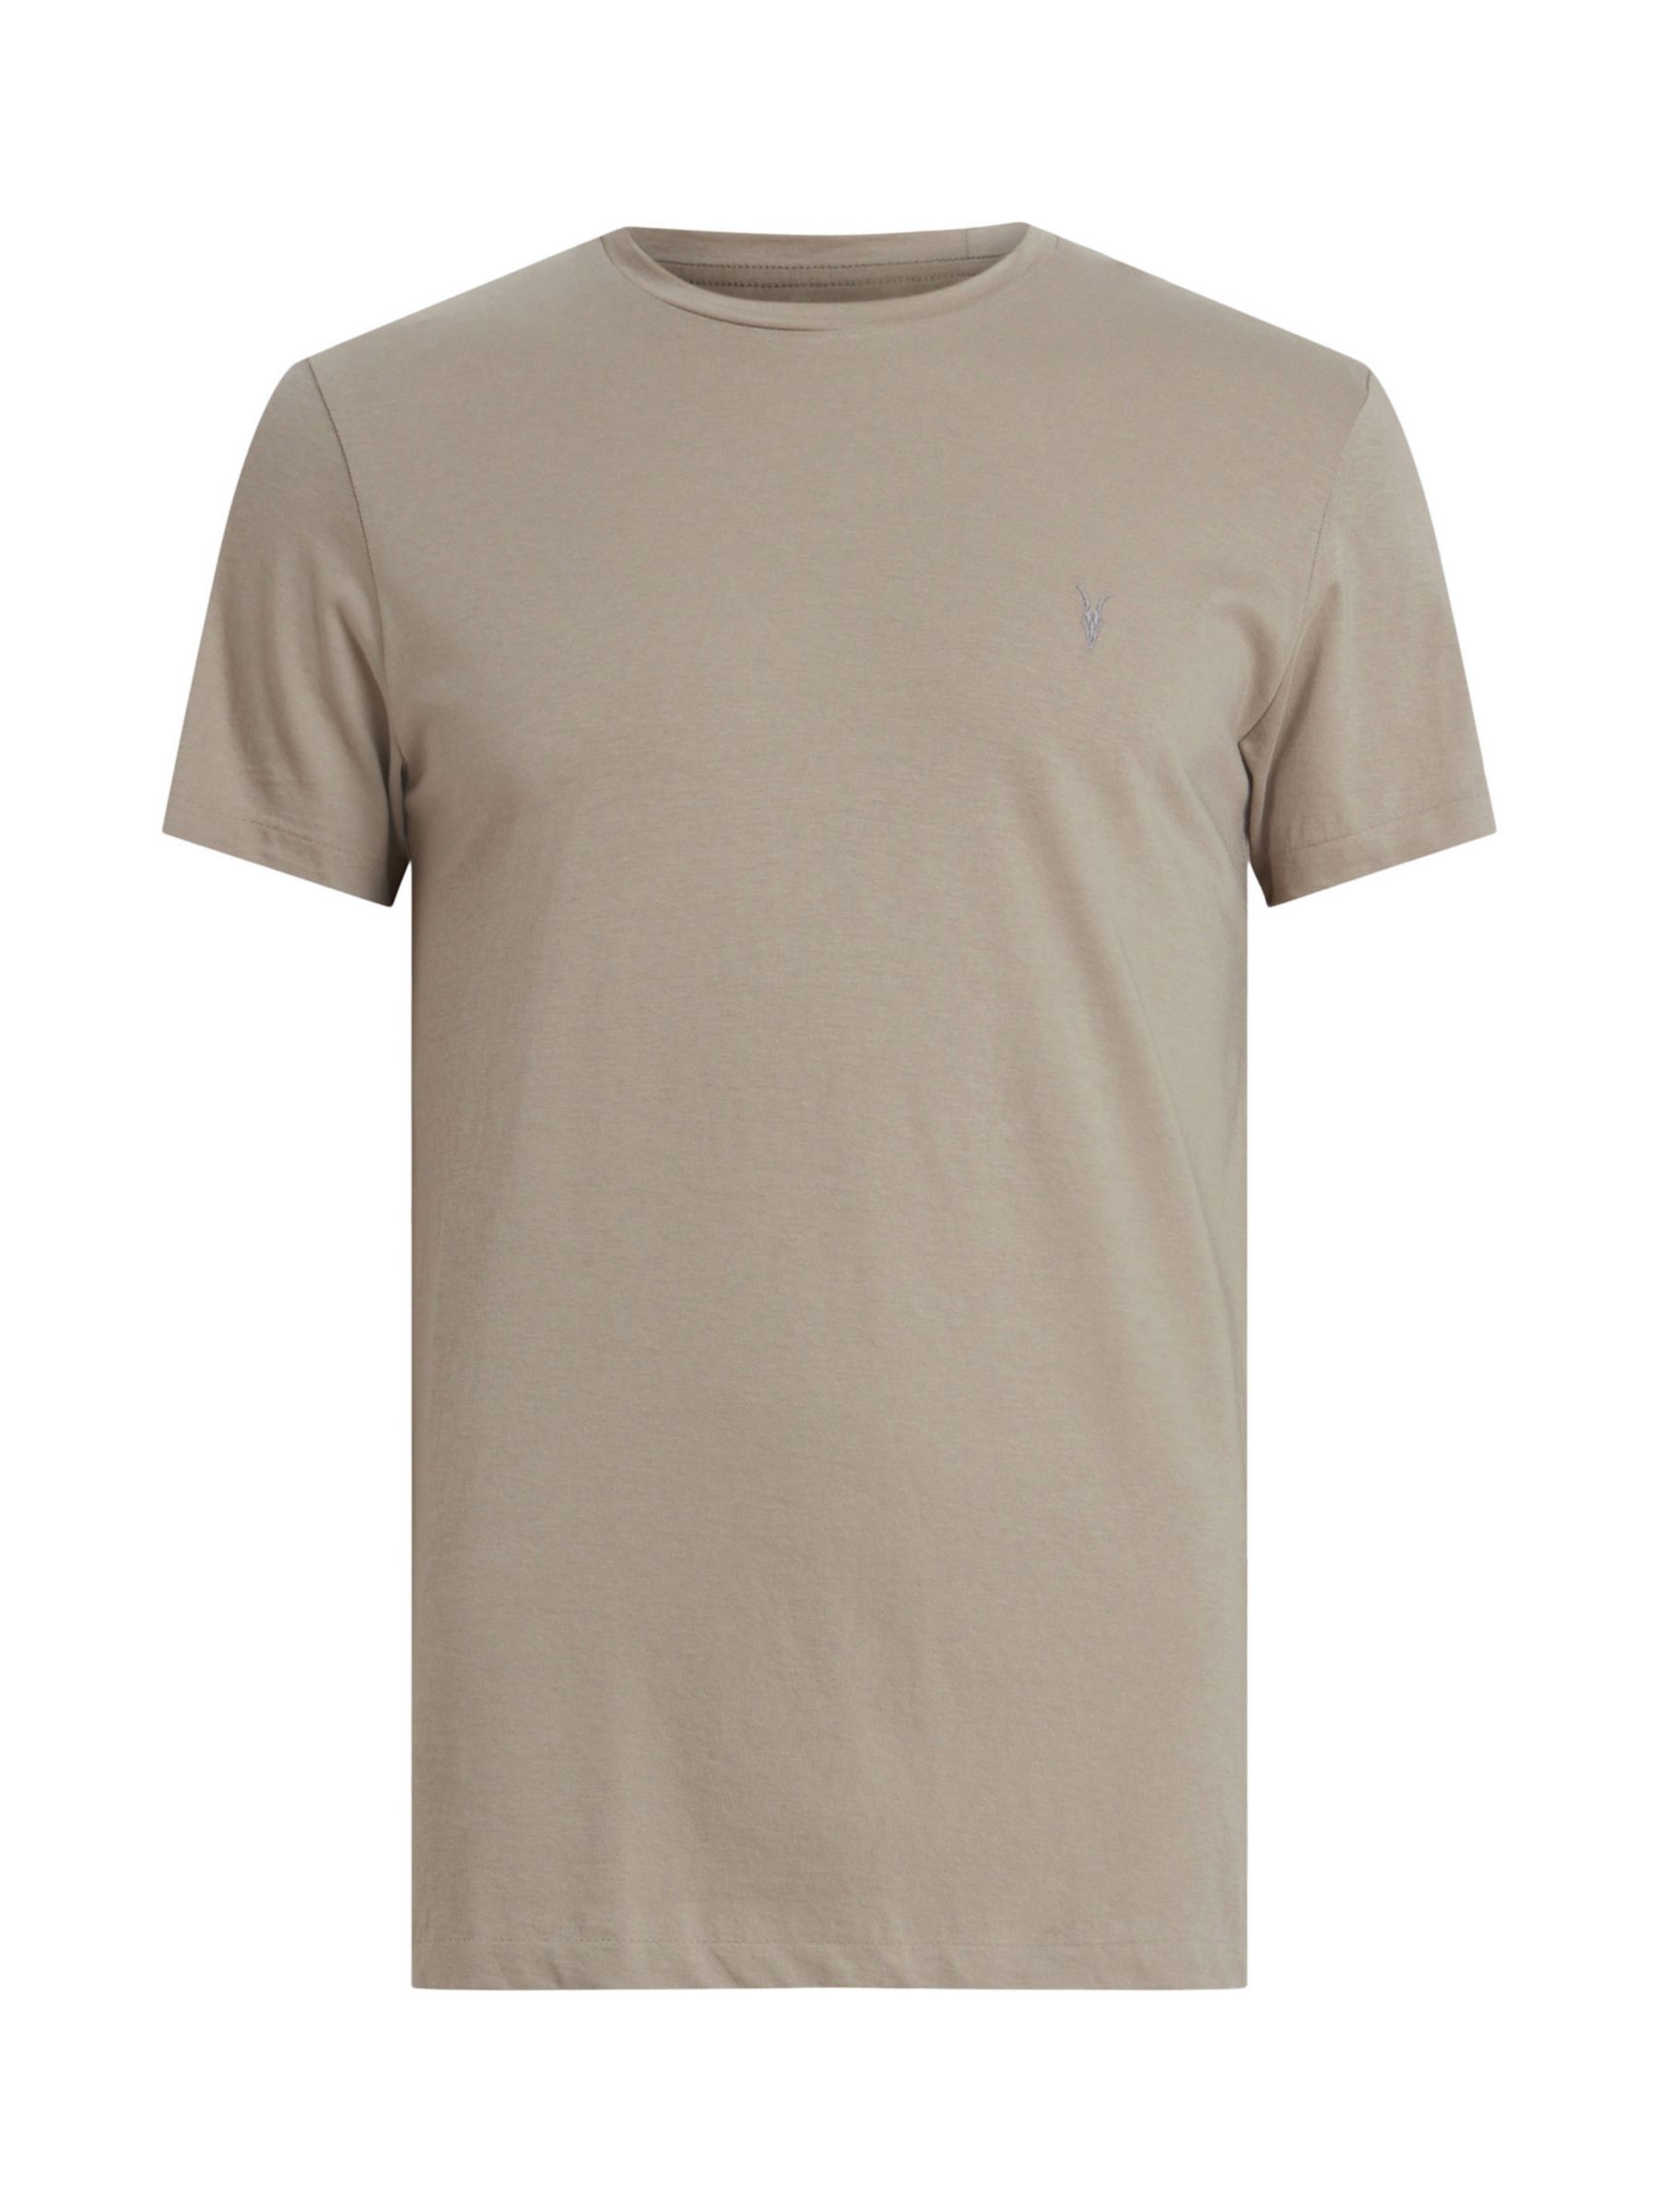 Buy AllSaints Tonic Organic Cotton T-Shirt Online at johnlewis.com